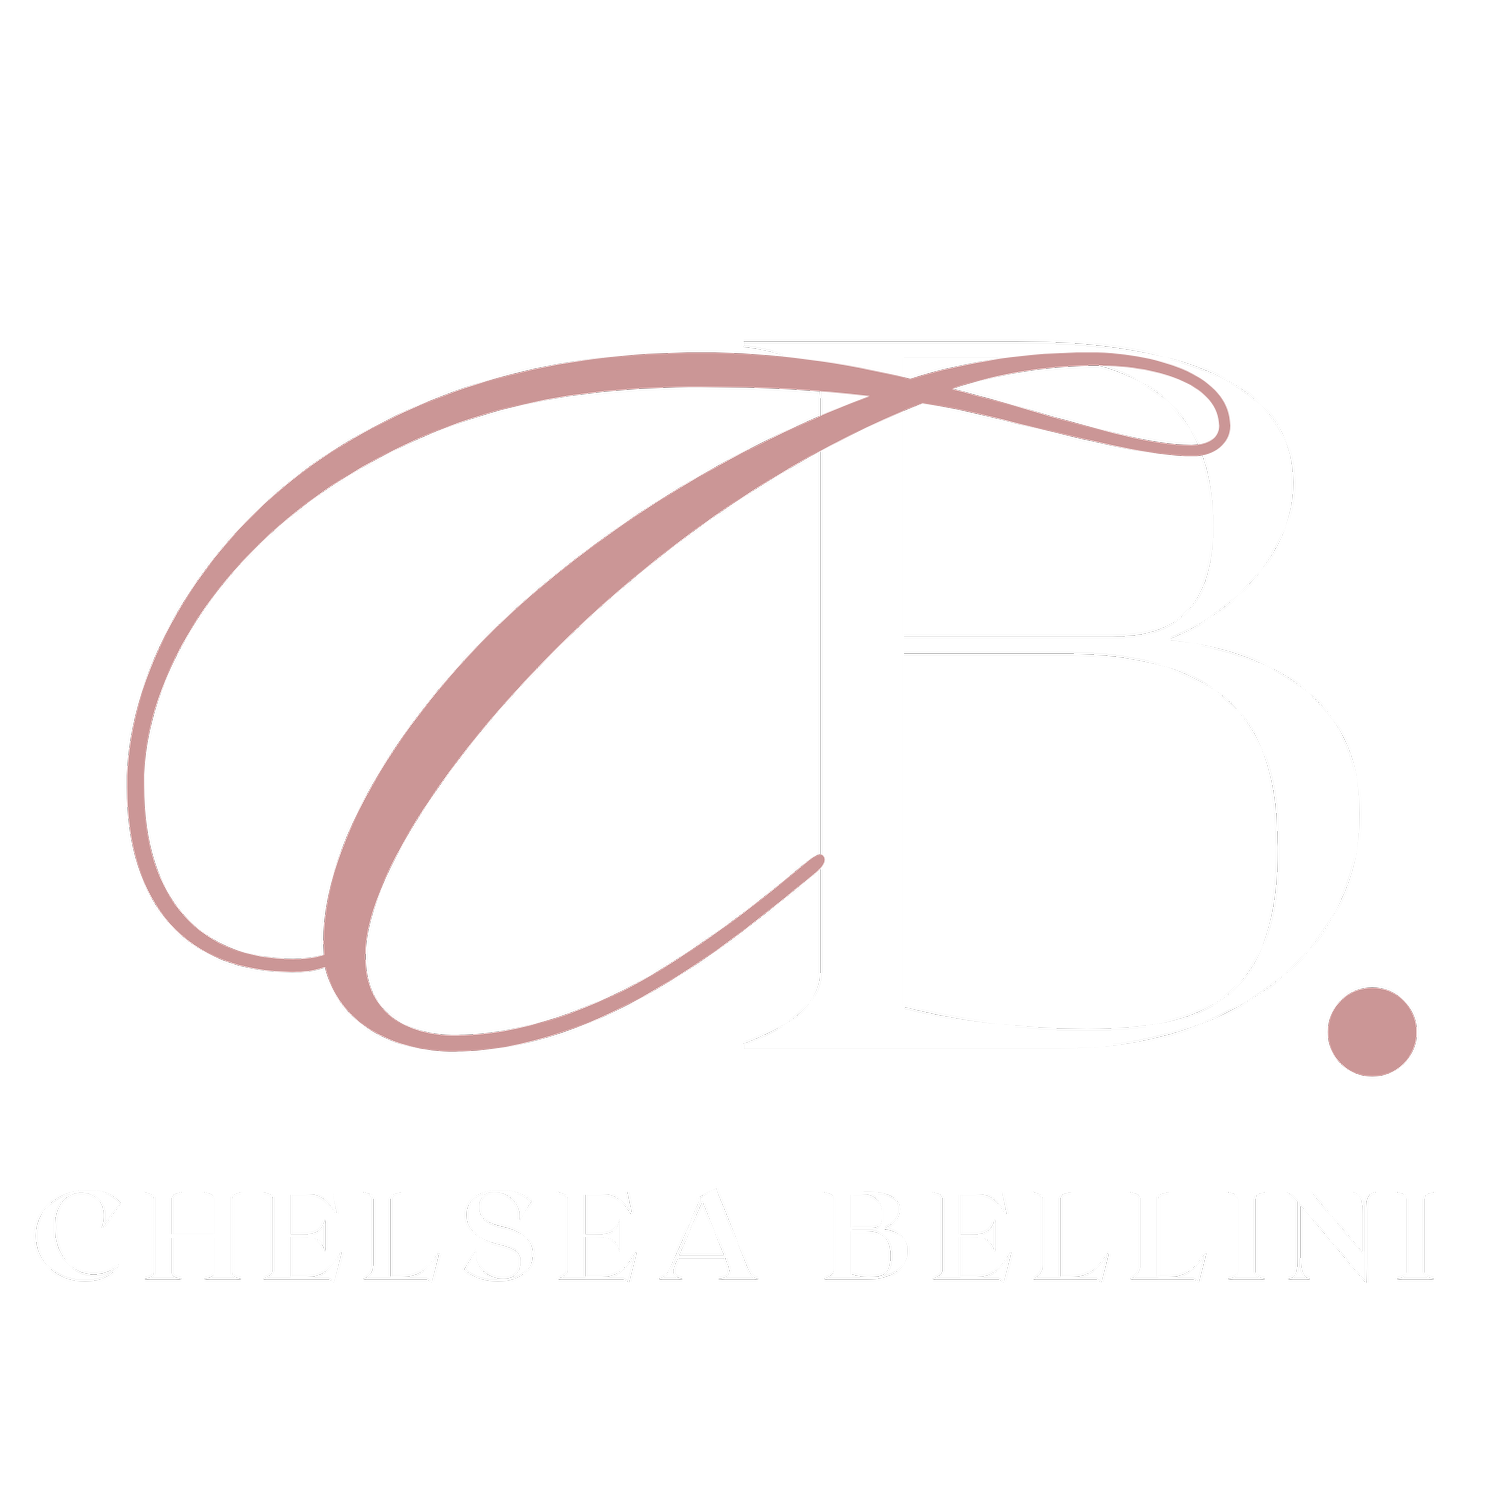 Meet Chelsea Bellini 